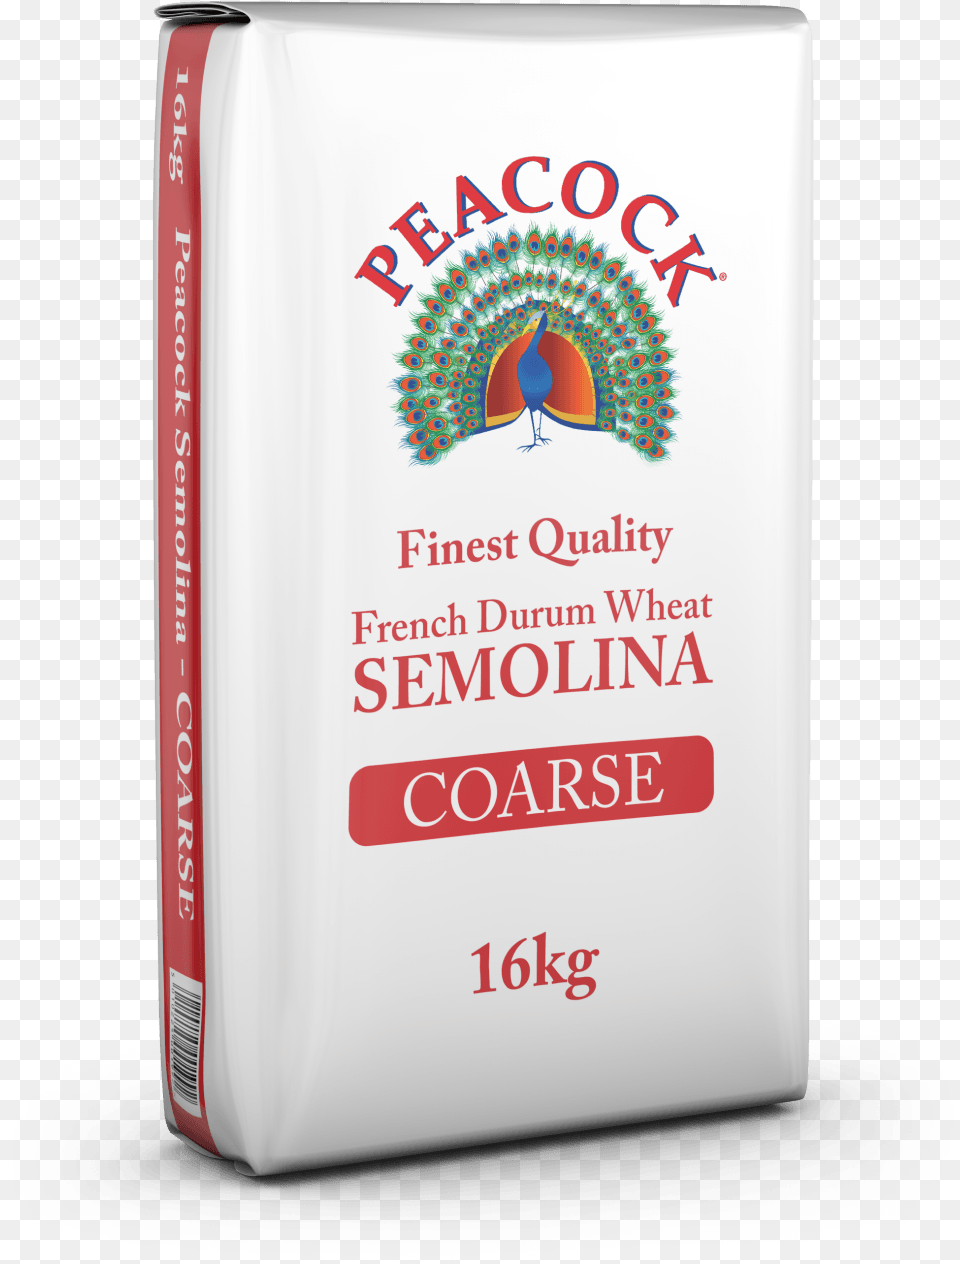 Peacock Semolina Coarse 16kg Raw Milk, Powder, Bottle Free Png Download